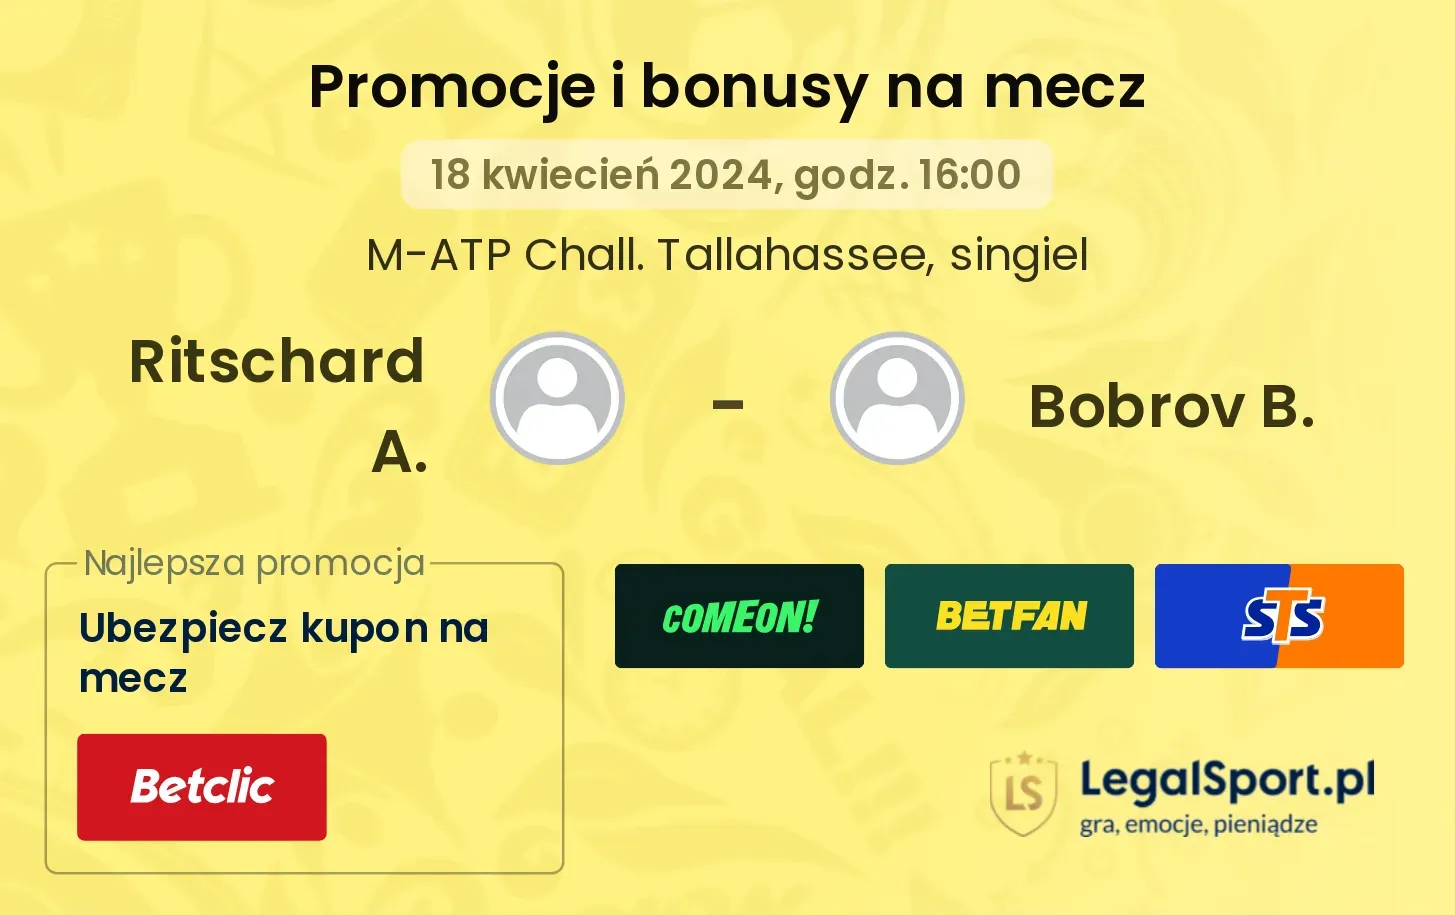 Ritschard A. - Bobrov B. promocje bonusy na mecz